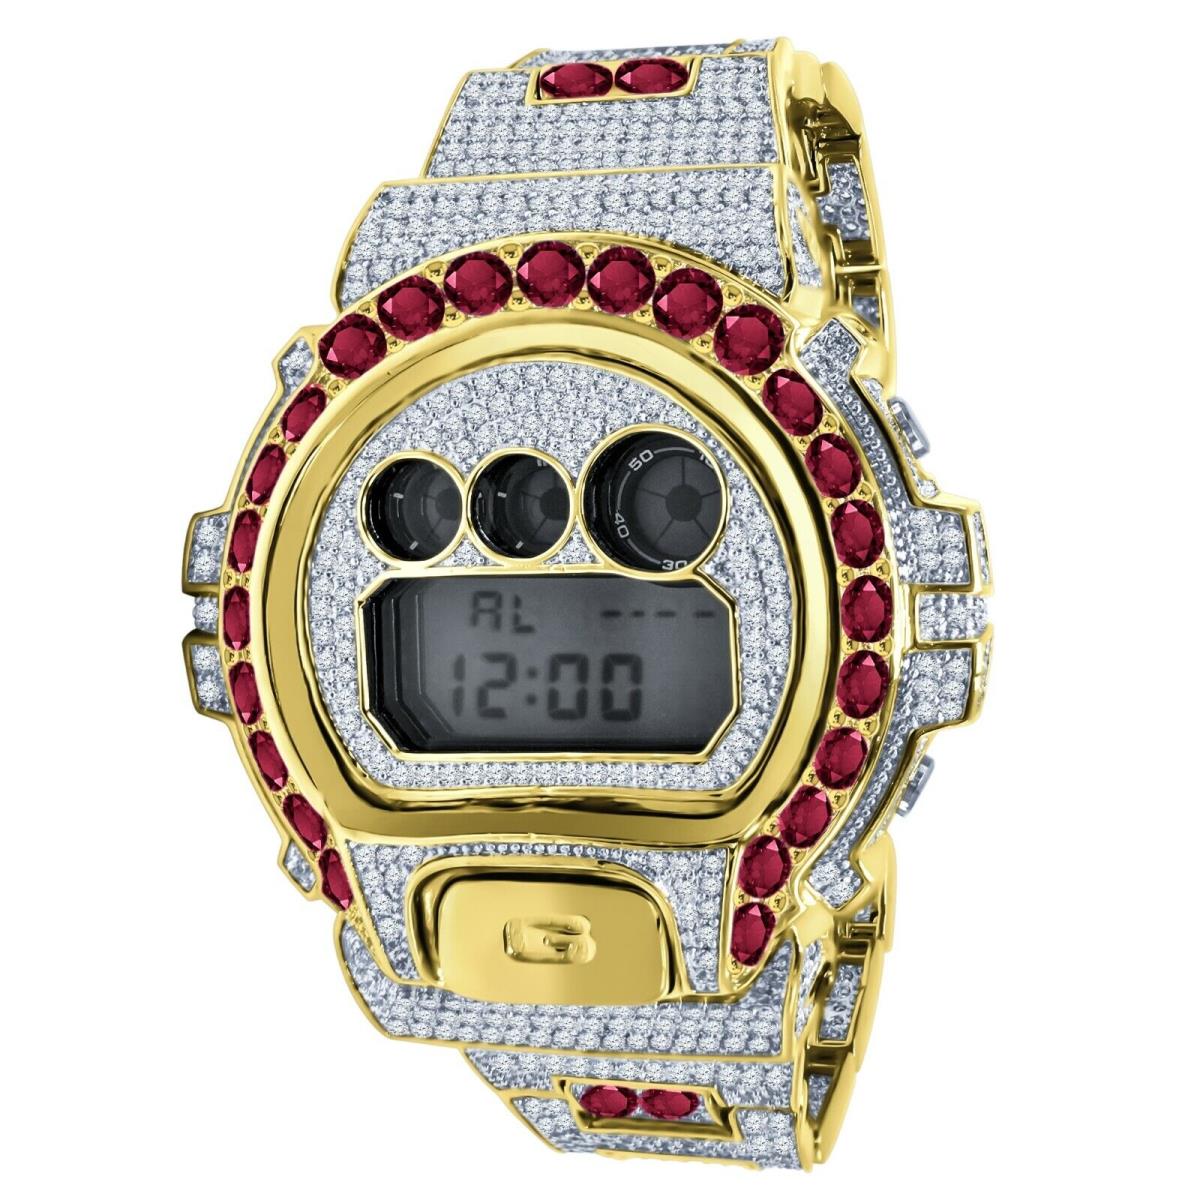 Pink Tourmaline Solitaire On Yellow Gold Finish Casio G-shock DW-6900 Watch